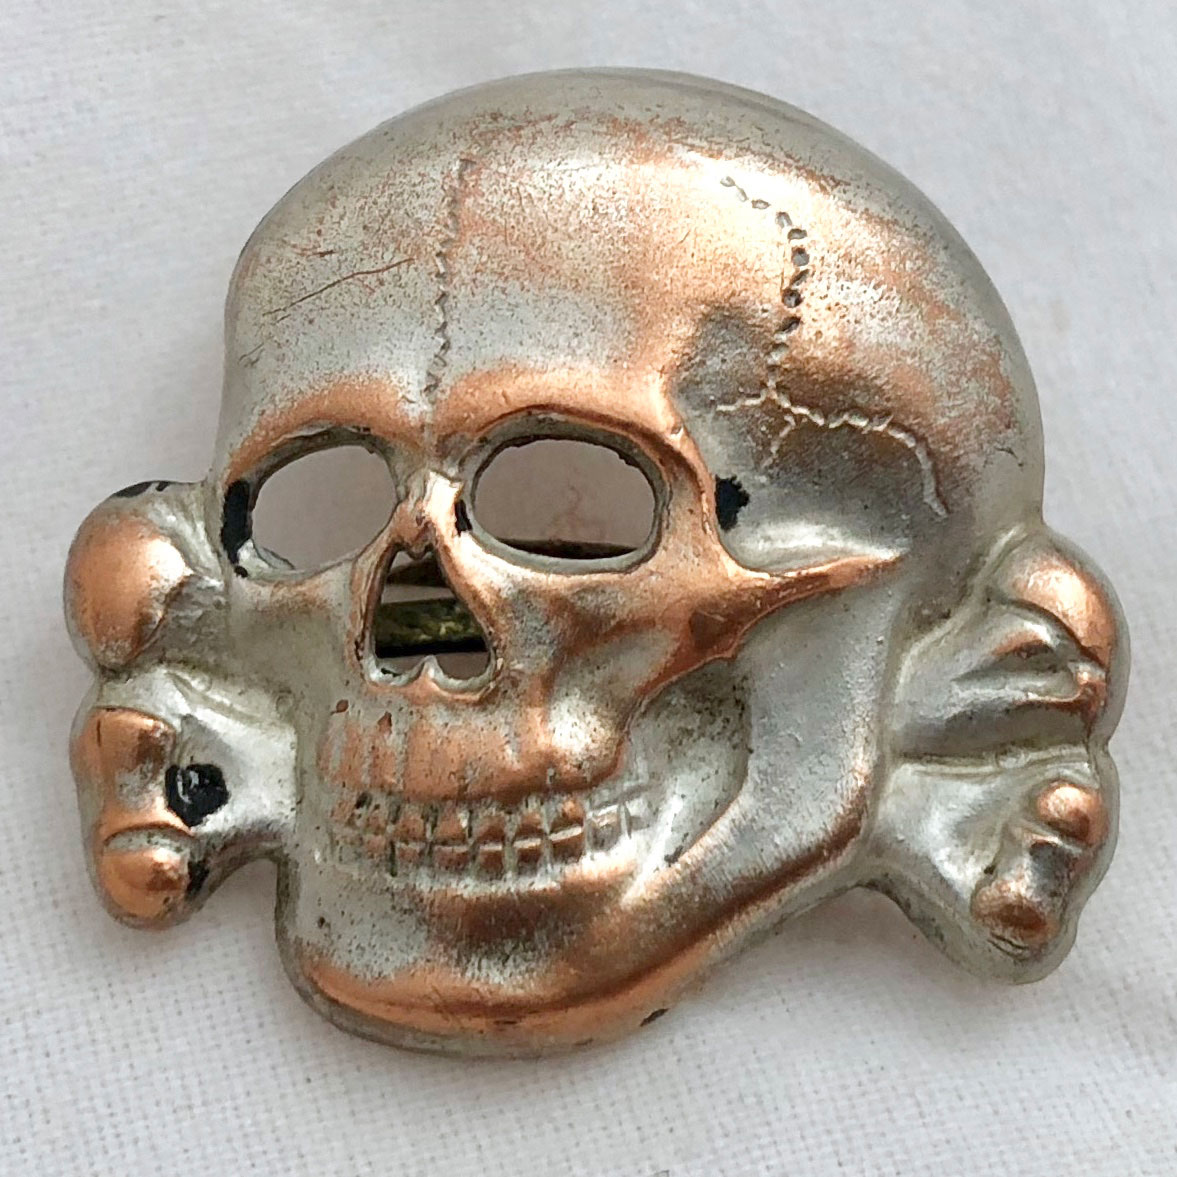 SS Cap Skull by Deschler & Sohn, 2nd Pattern (RZM 1/52)